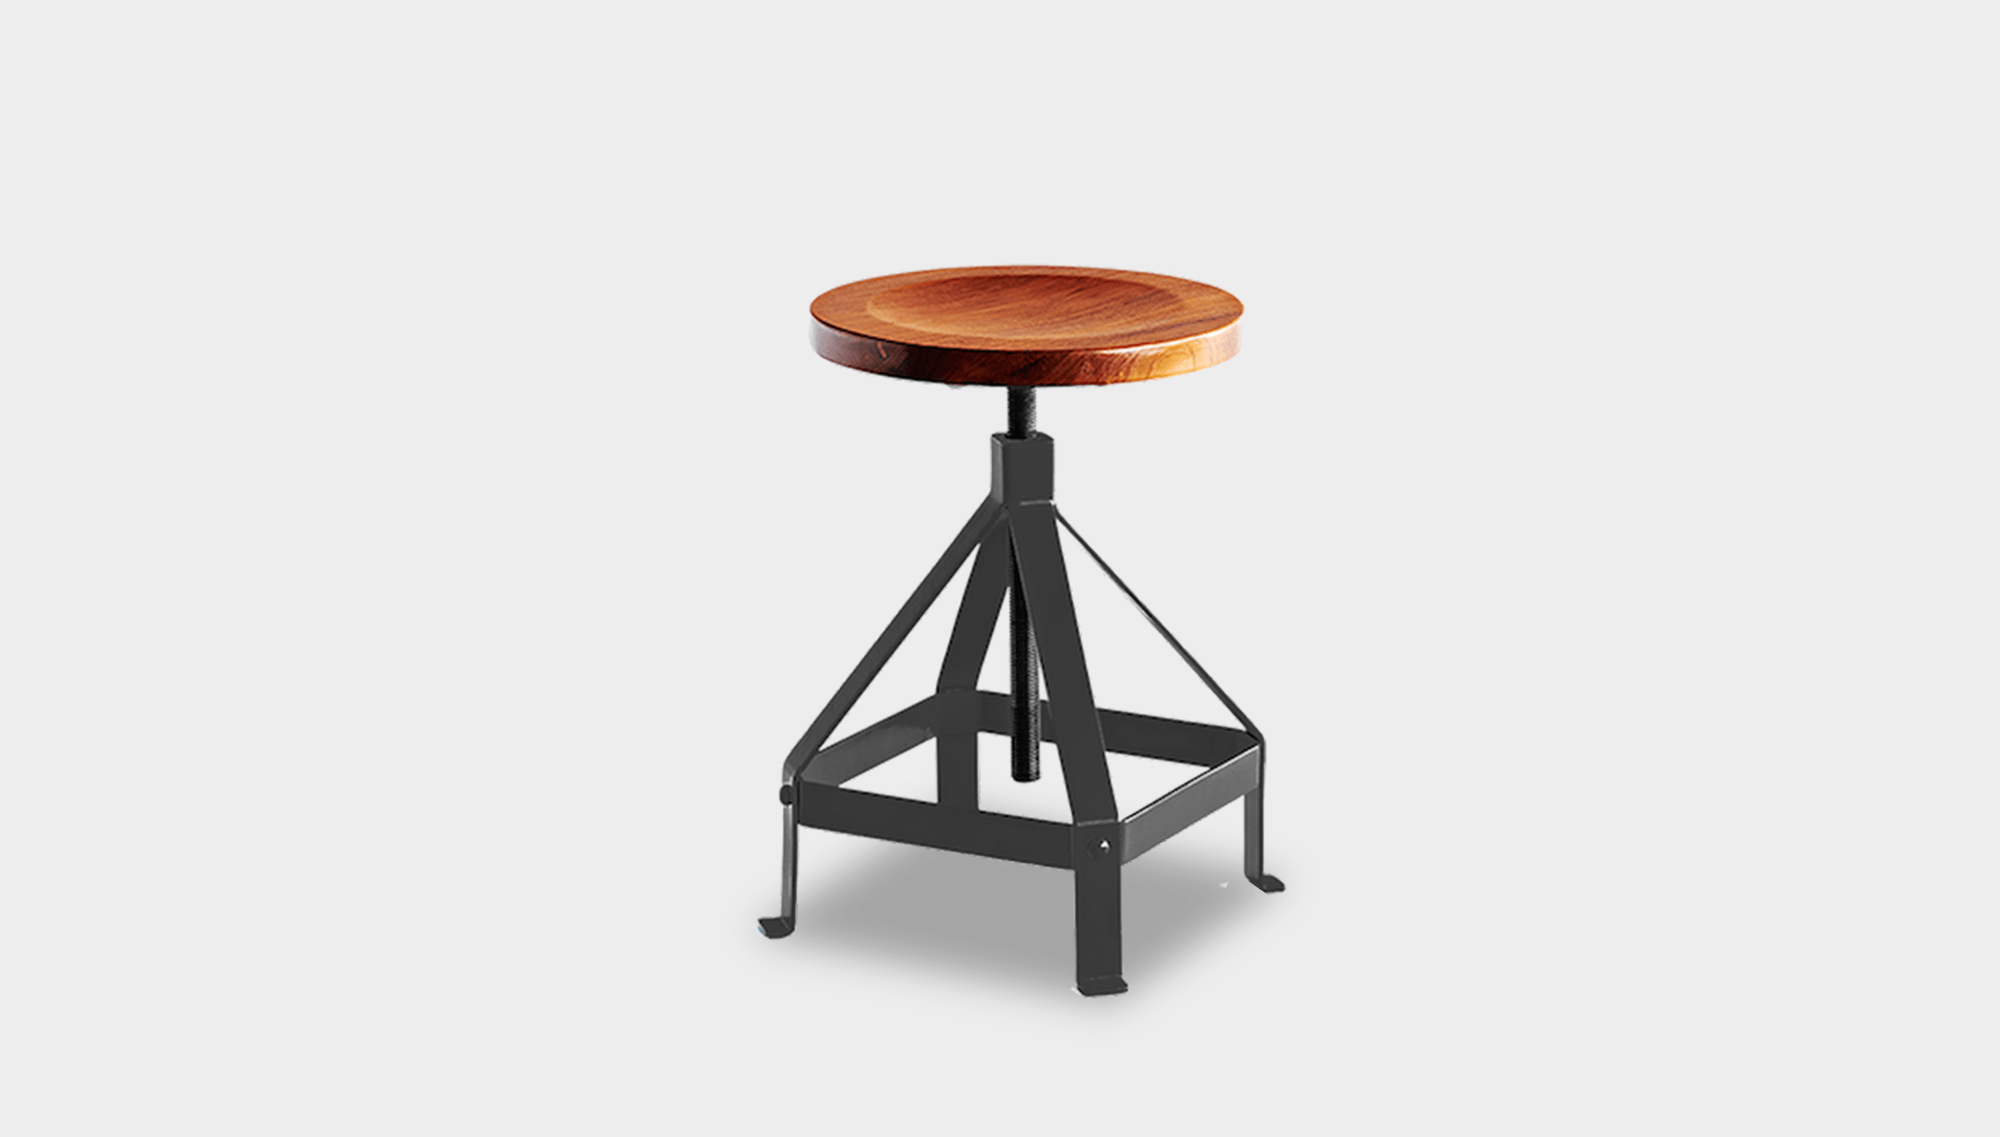 reddie-raw stool 35dia x 45-62H *cm / Wood Teak~Natural / Metal~Black Suzy Adjustable Stool